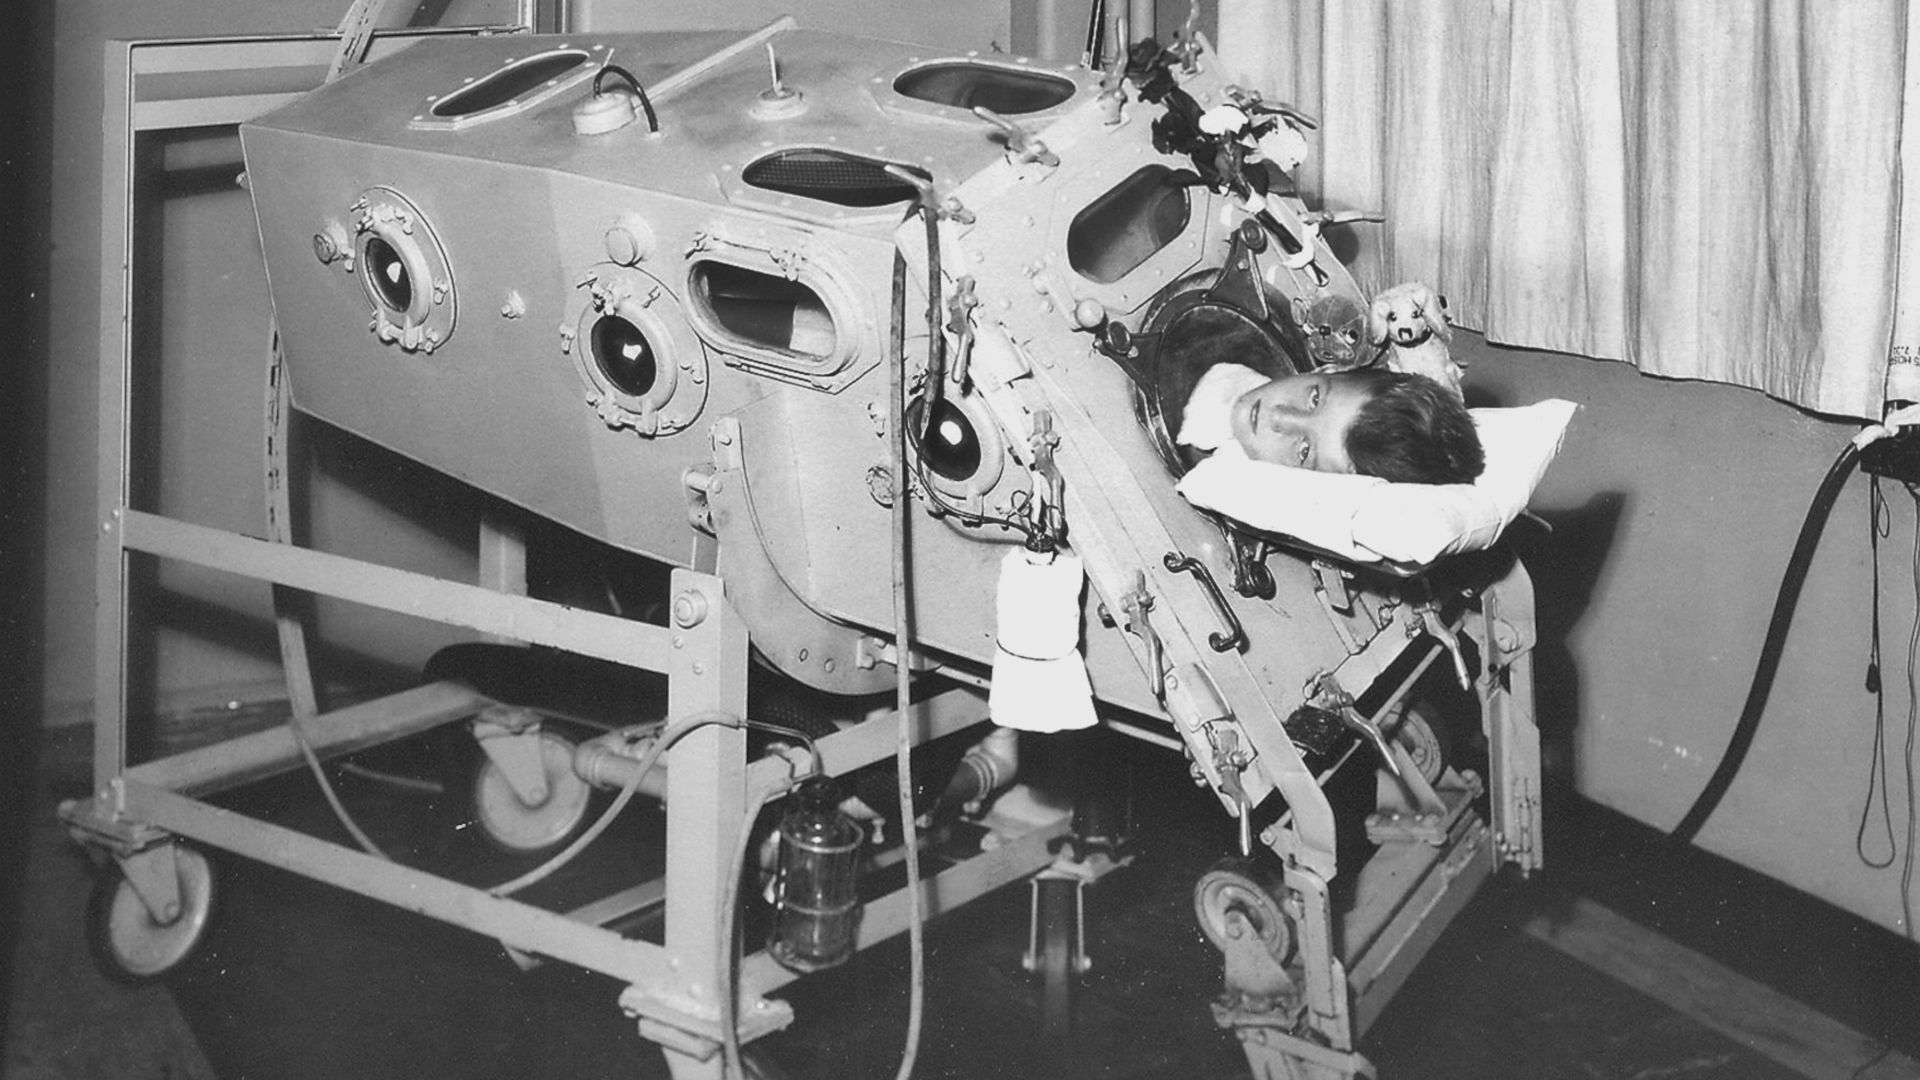 polio breathing machine